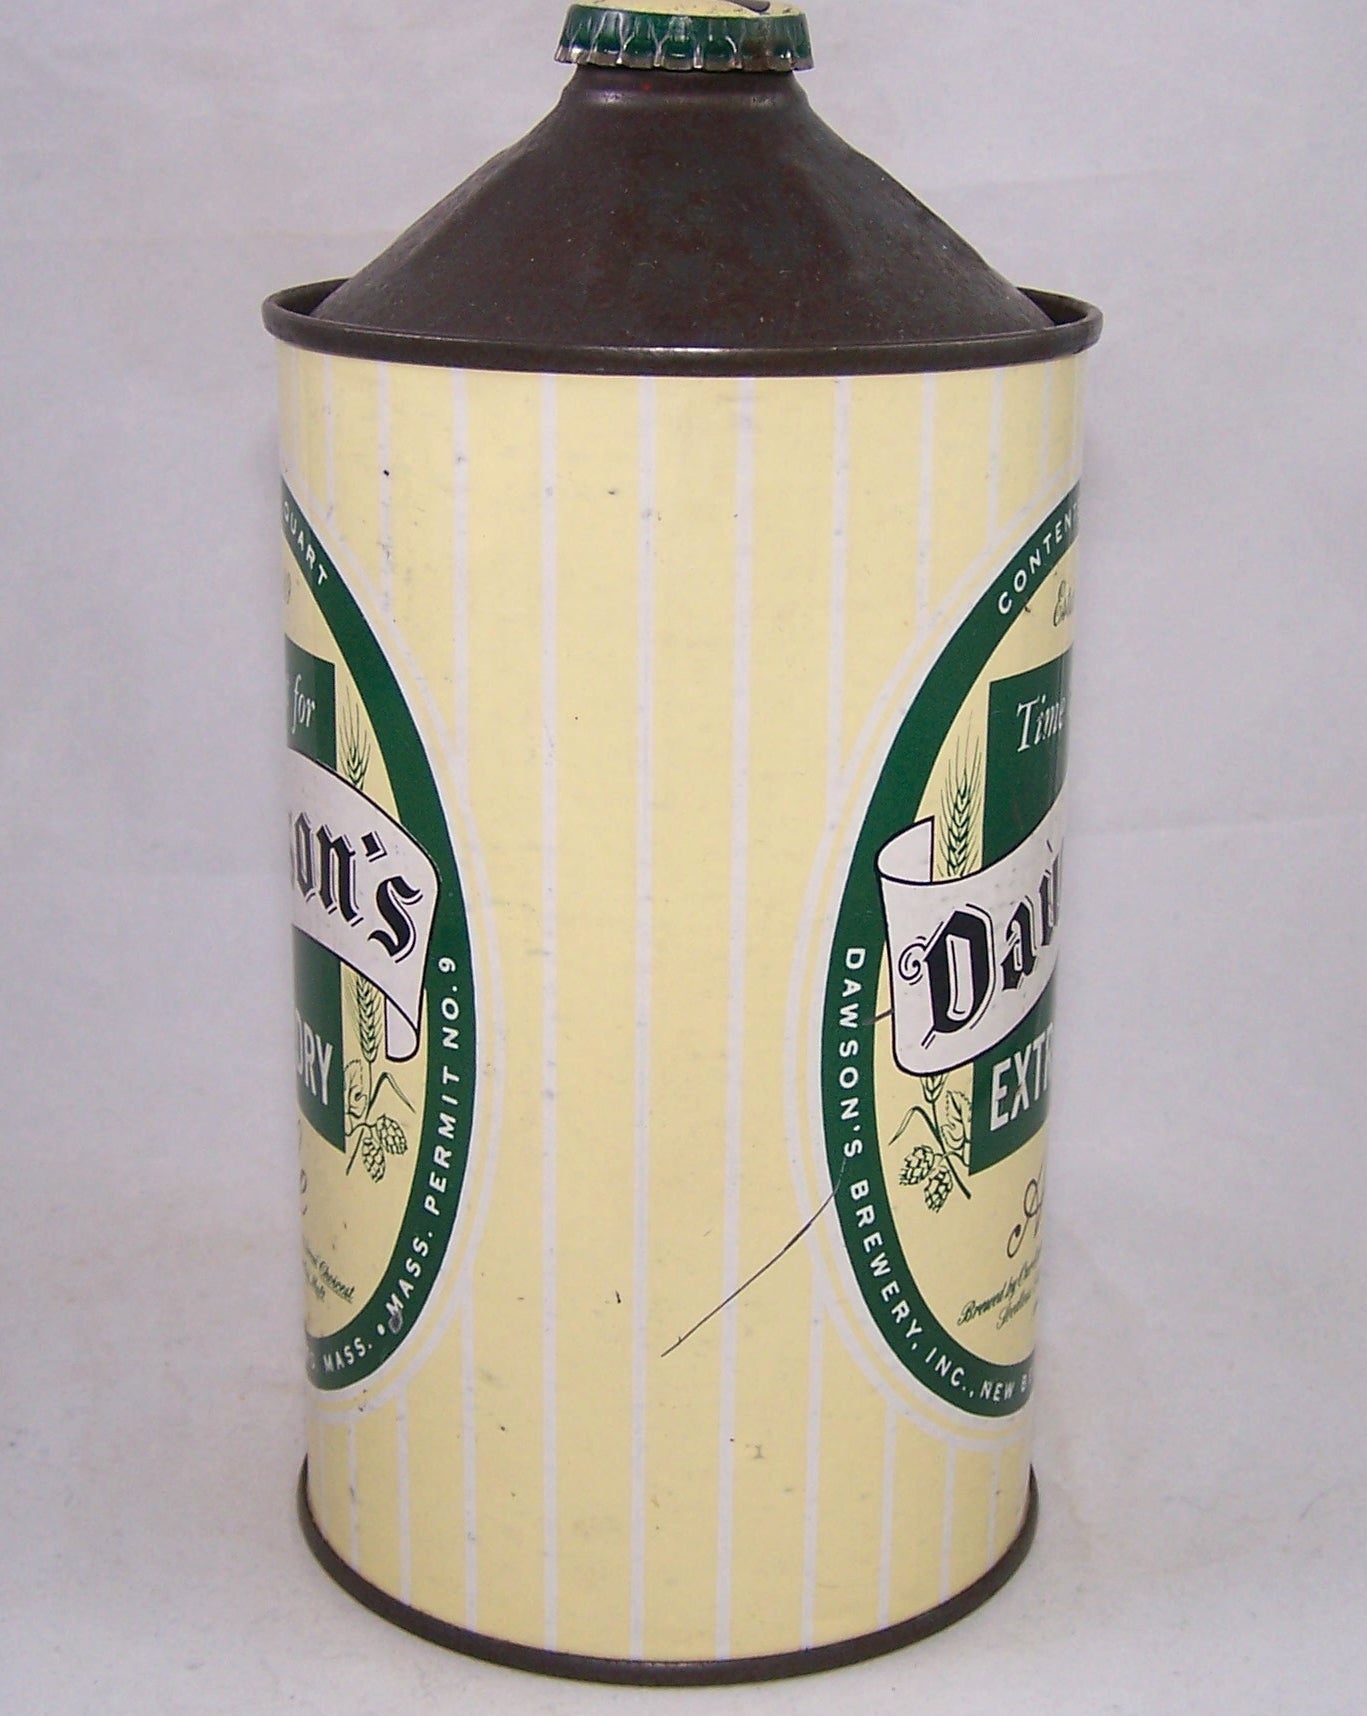 Dawson's Extra Dry Ale. USBC 206-16, Grade 1 Sold on 02/25/18